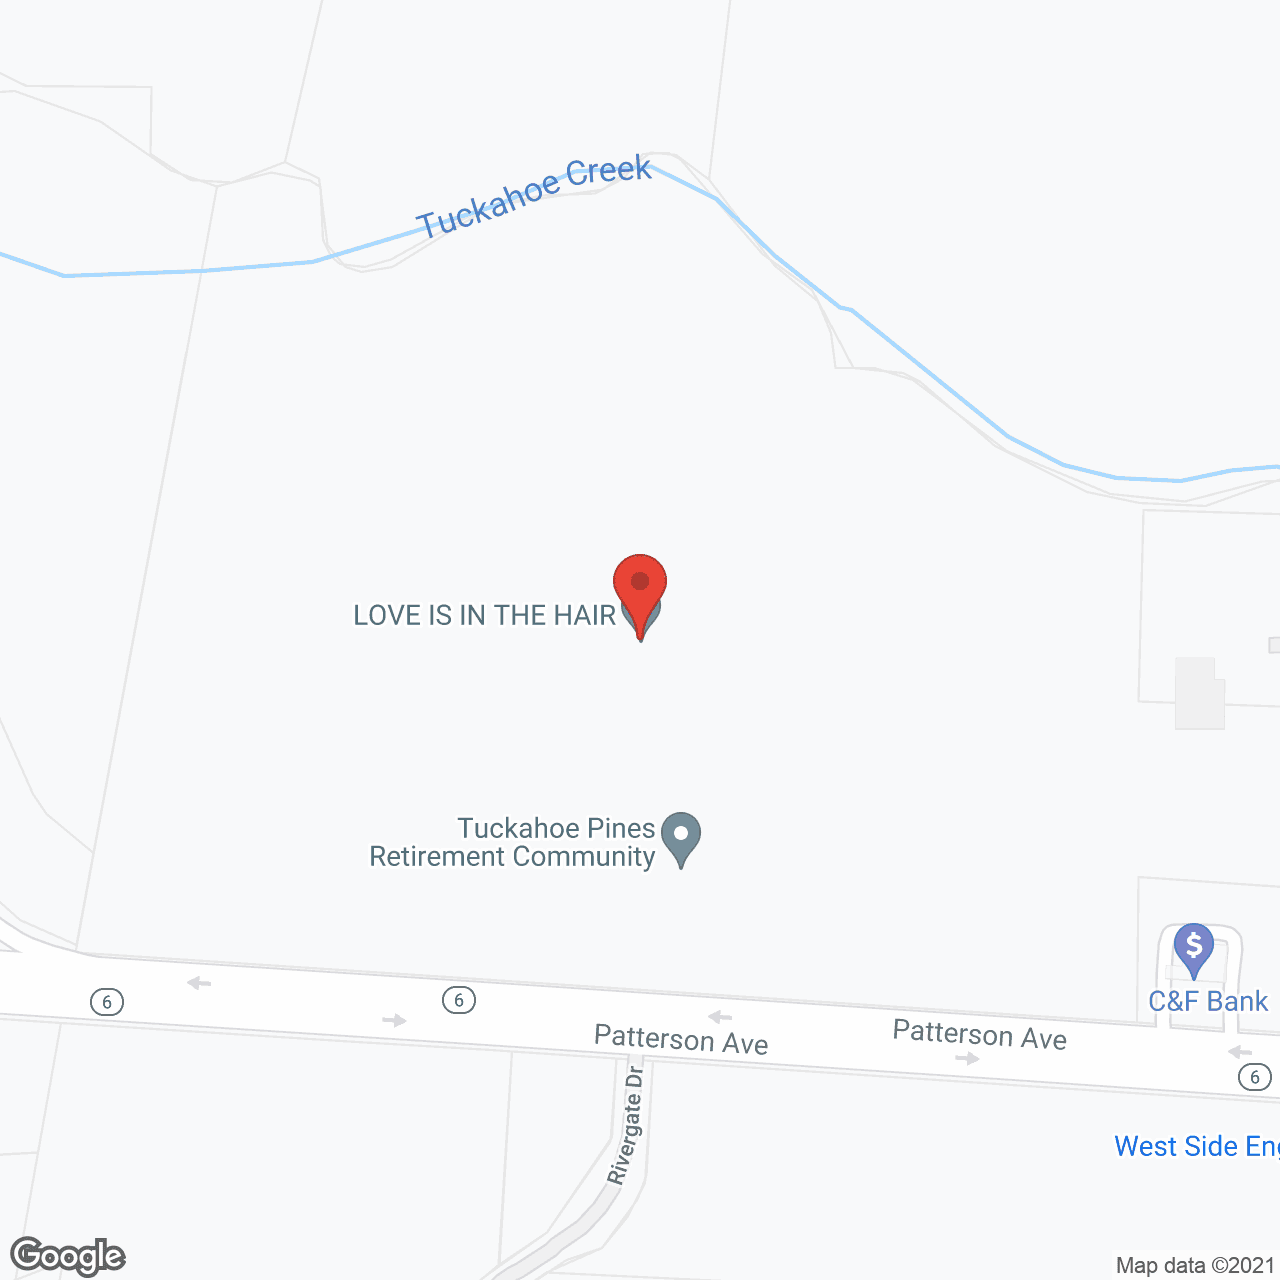 Tuckahoe Pines Retirement Community in google map